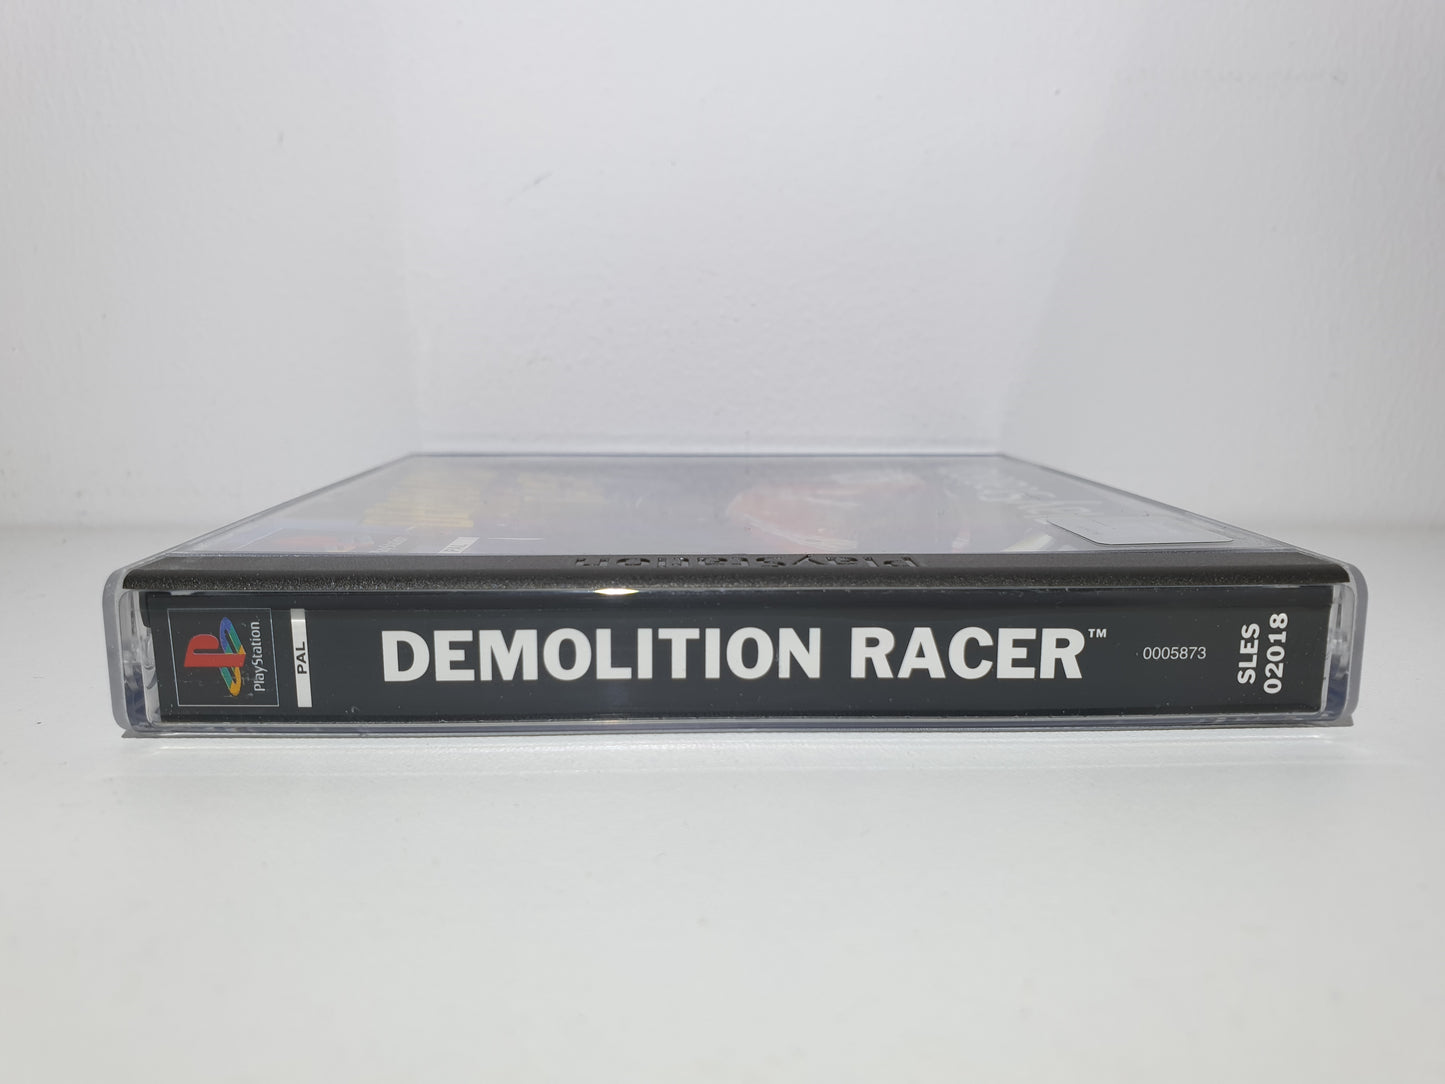 Demolition Racer PS1 - Occasion